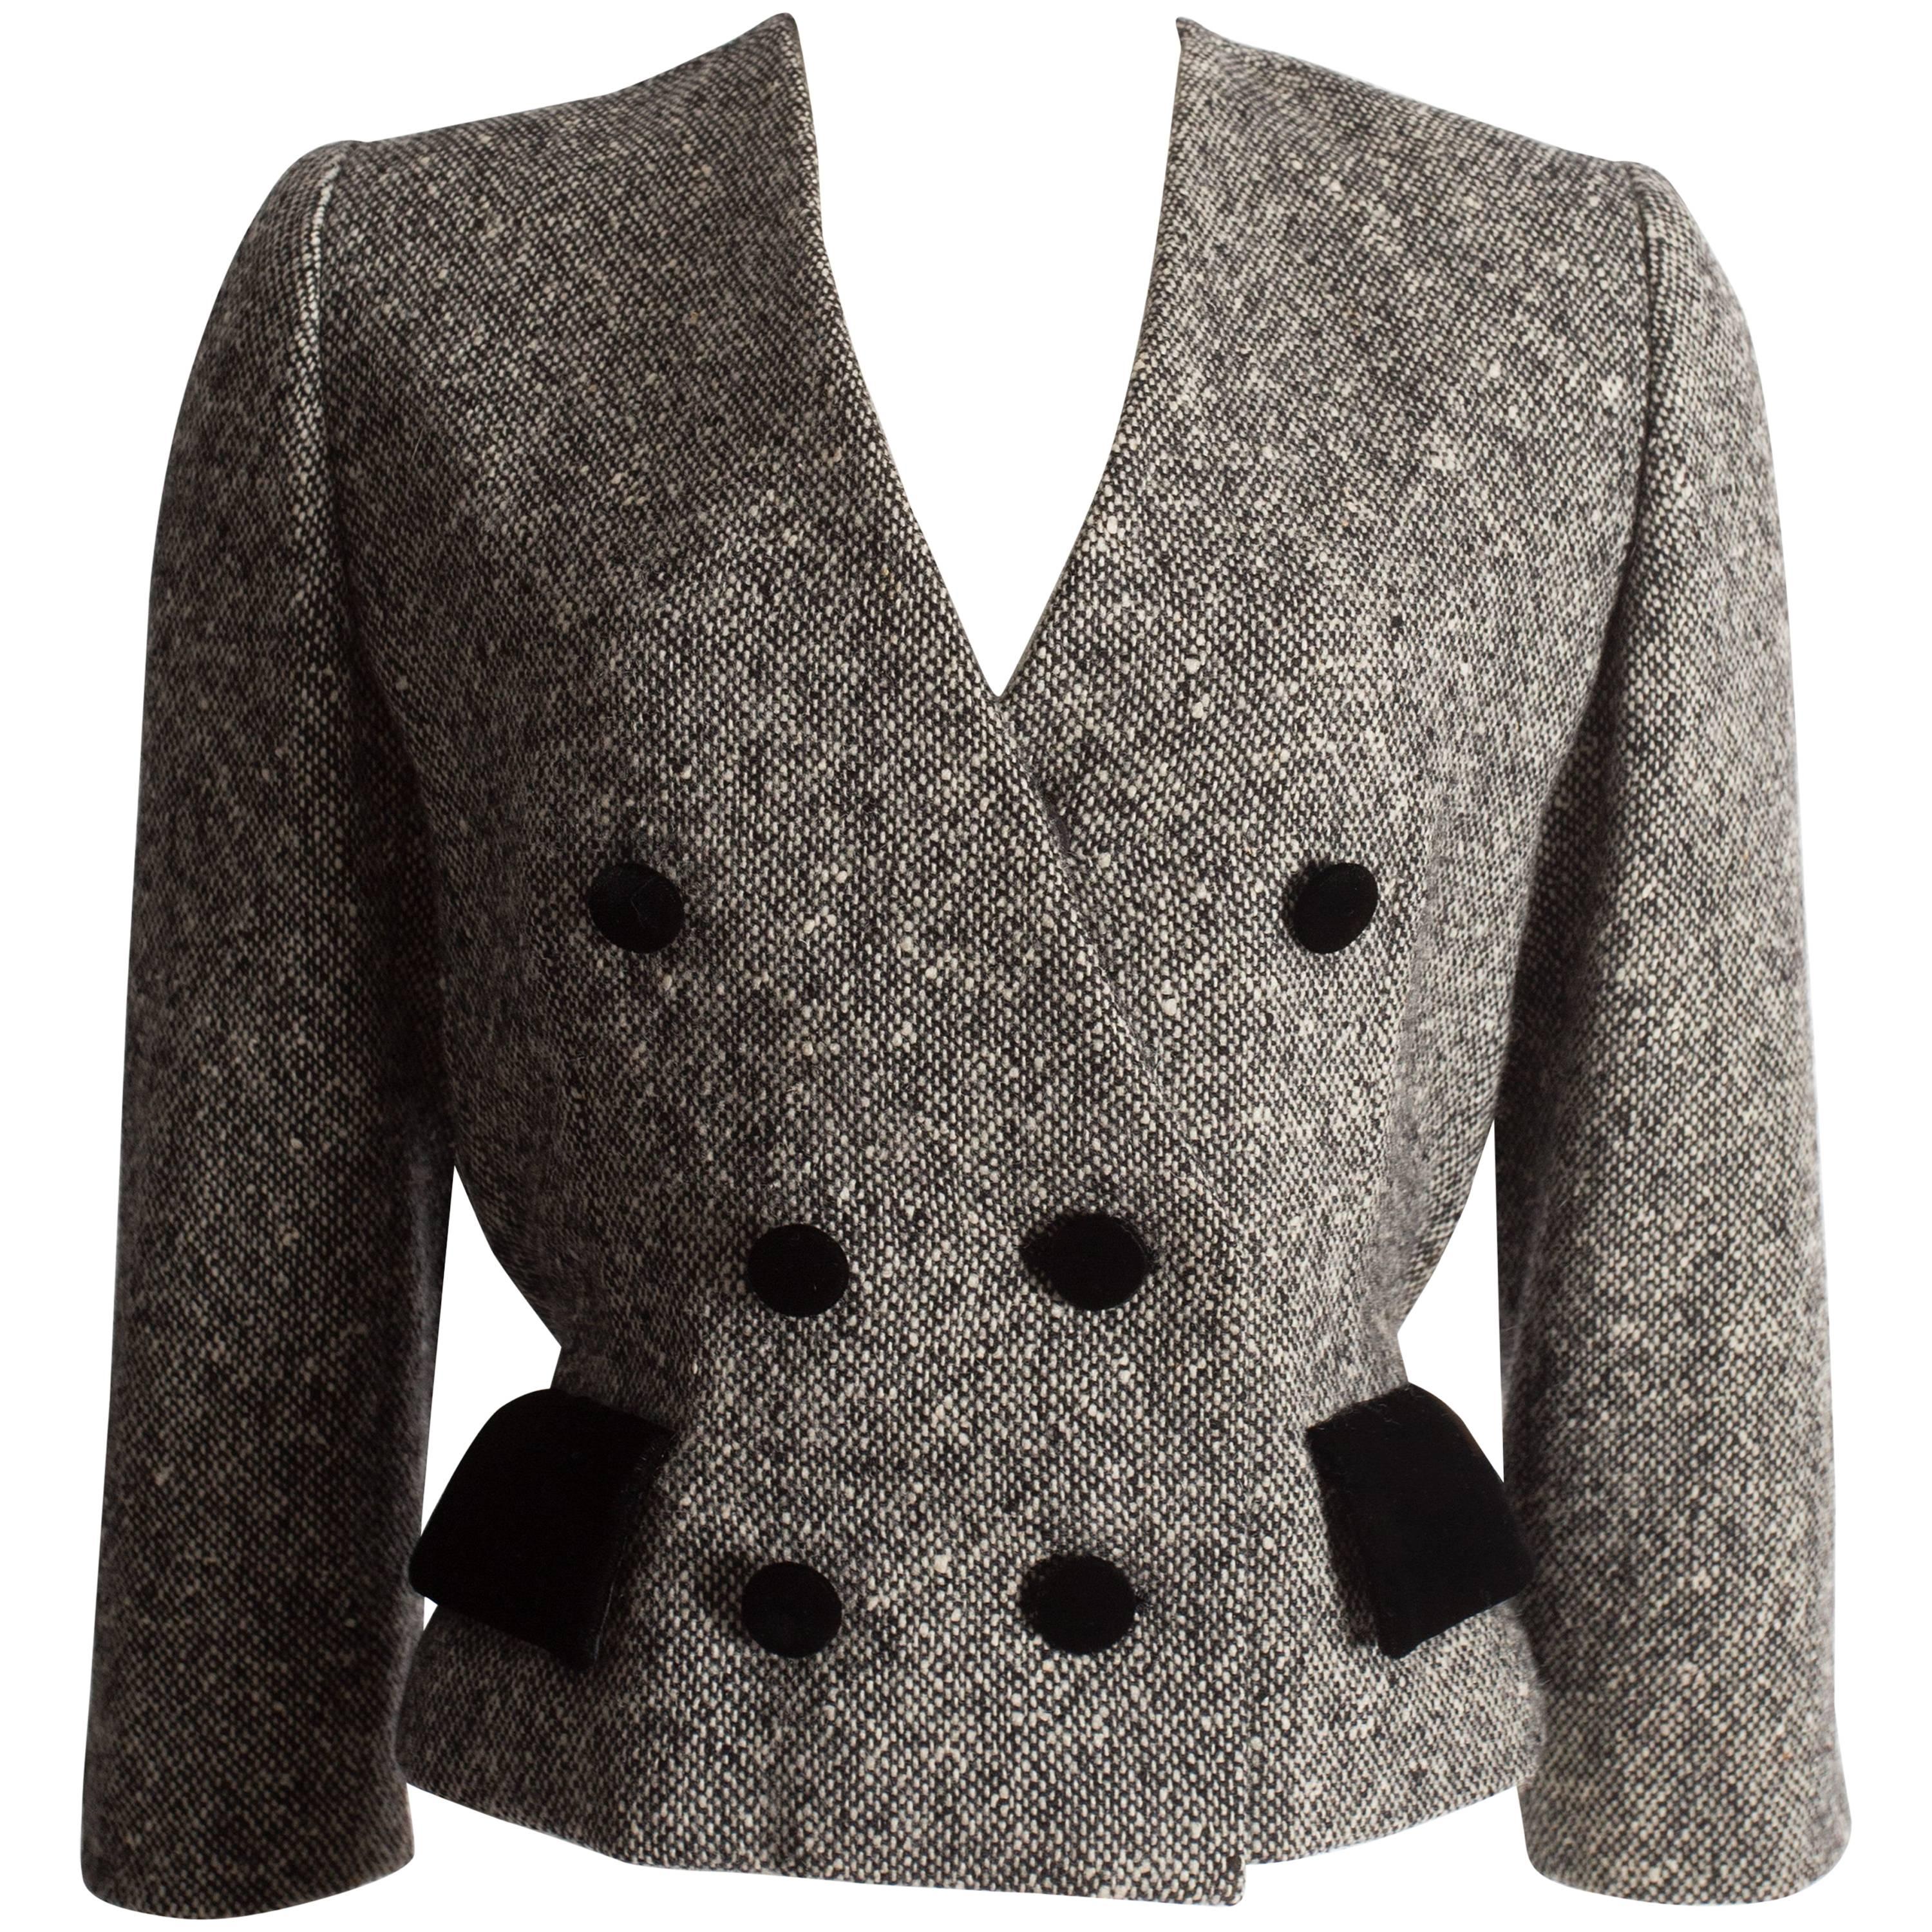 Christian Dior Haute Couture tweed jacket, circa 1950